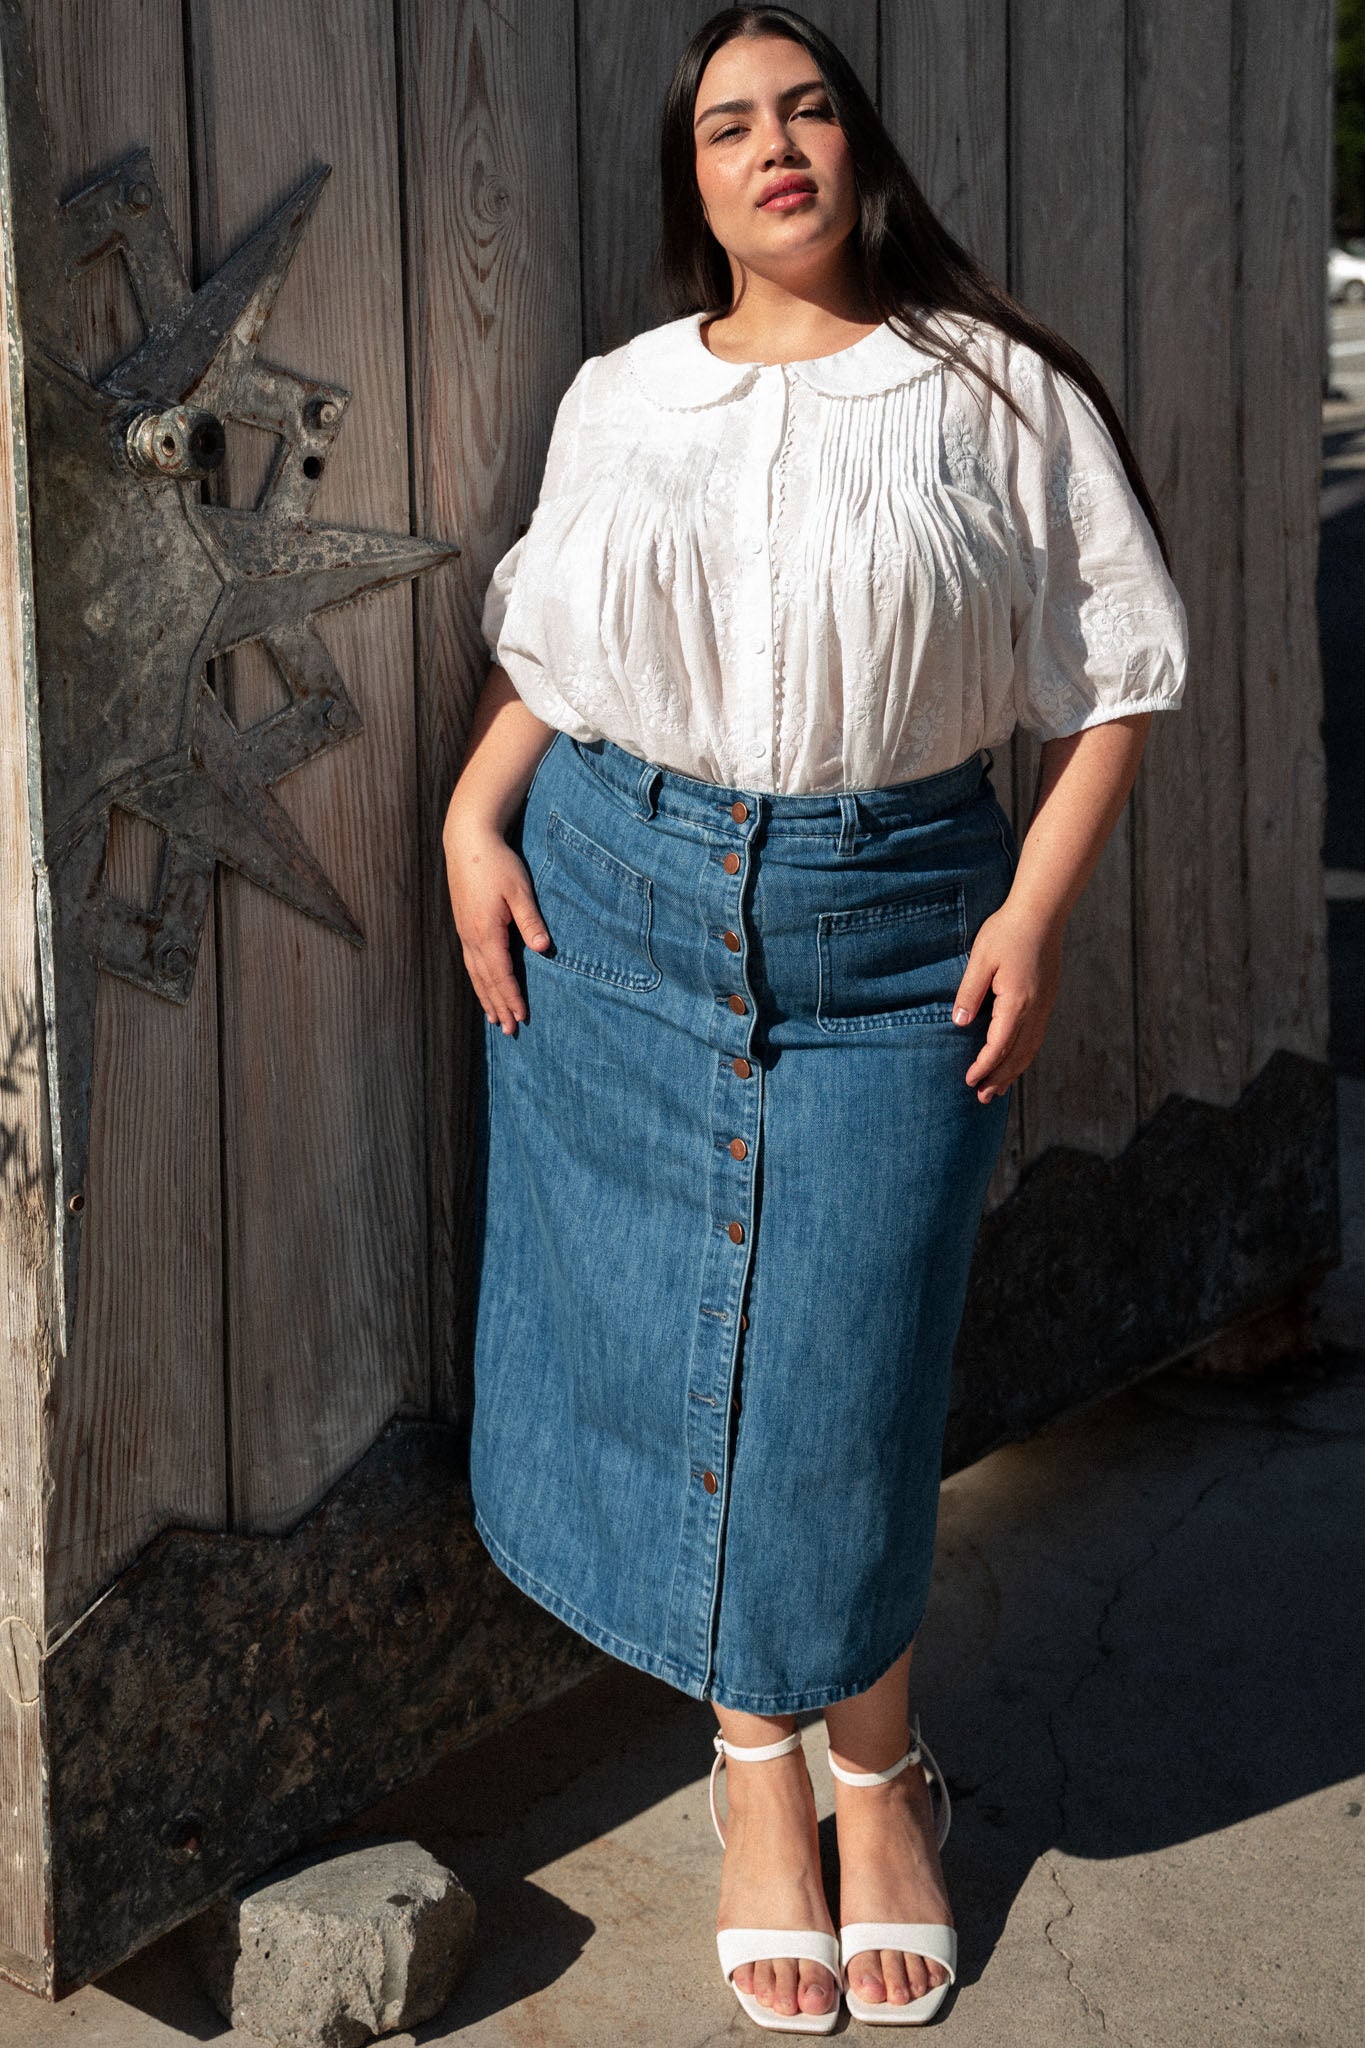 Plus Size - Jegging Denim Midi Skirt - Medium Wash - Torrid